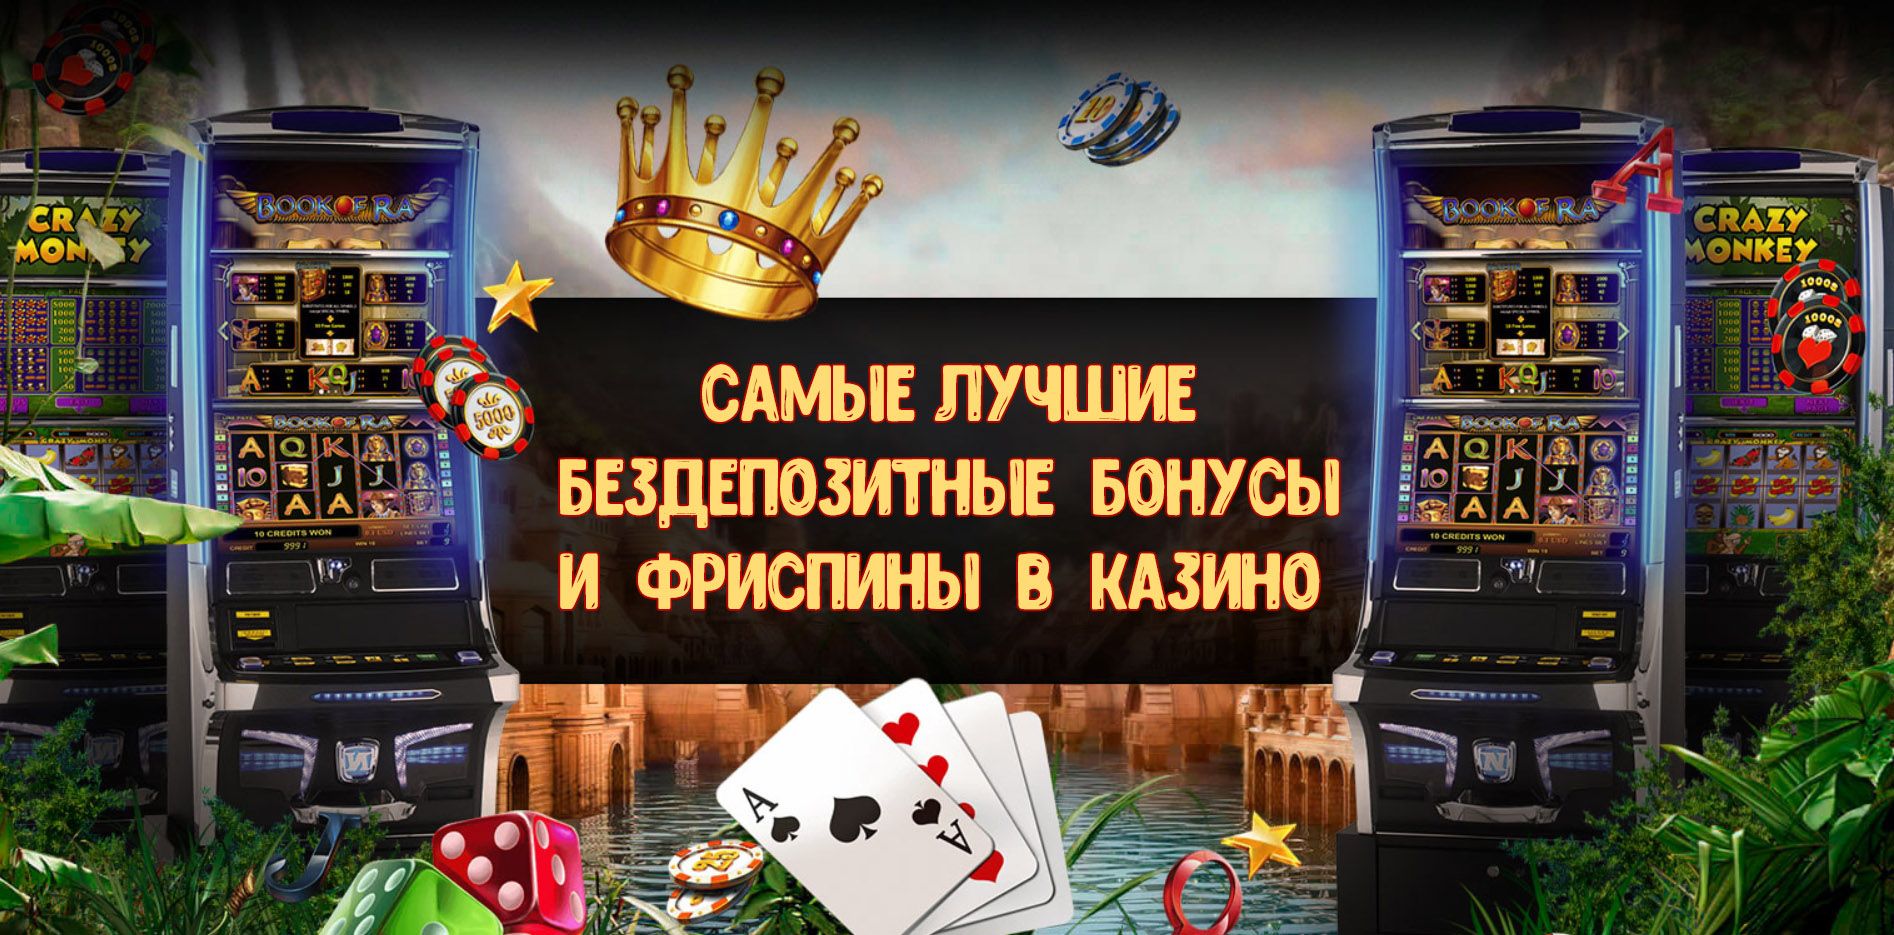 Вавада казино онлайн - рабочее зеркало официального сайта Vavada casino